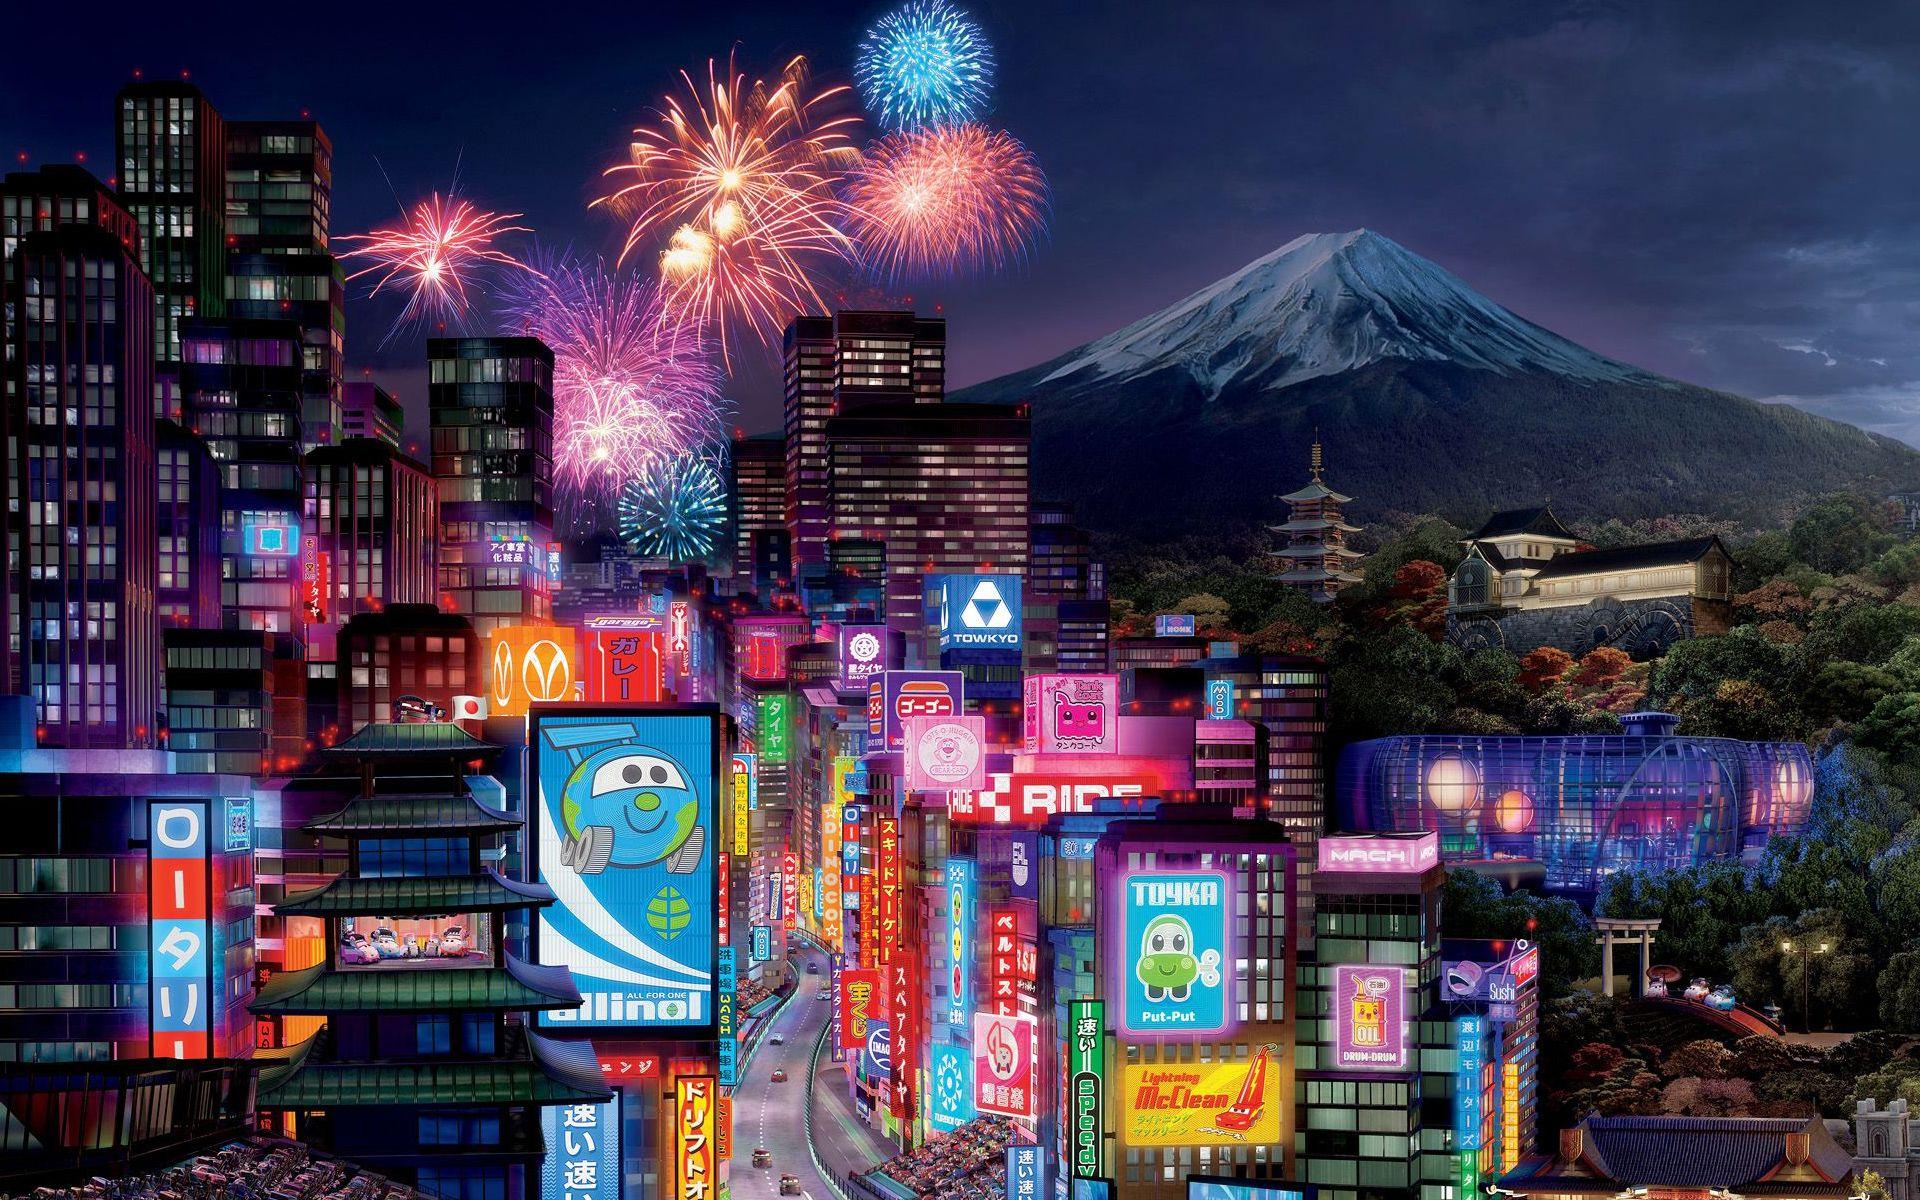 prompthunt: anime background,Tokyo under a blue sky